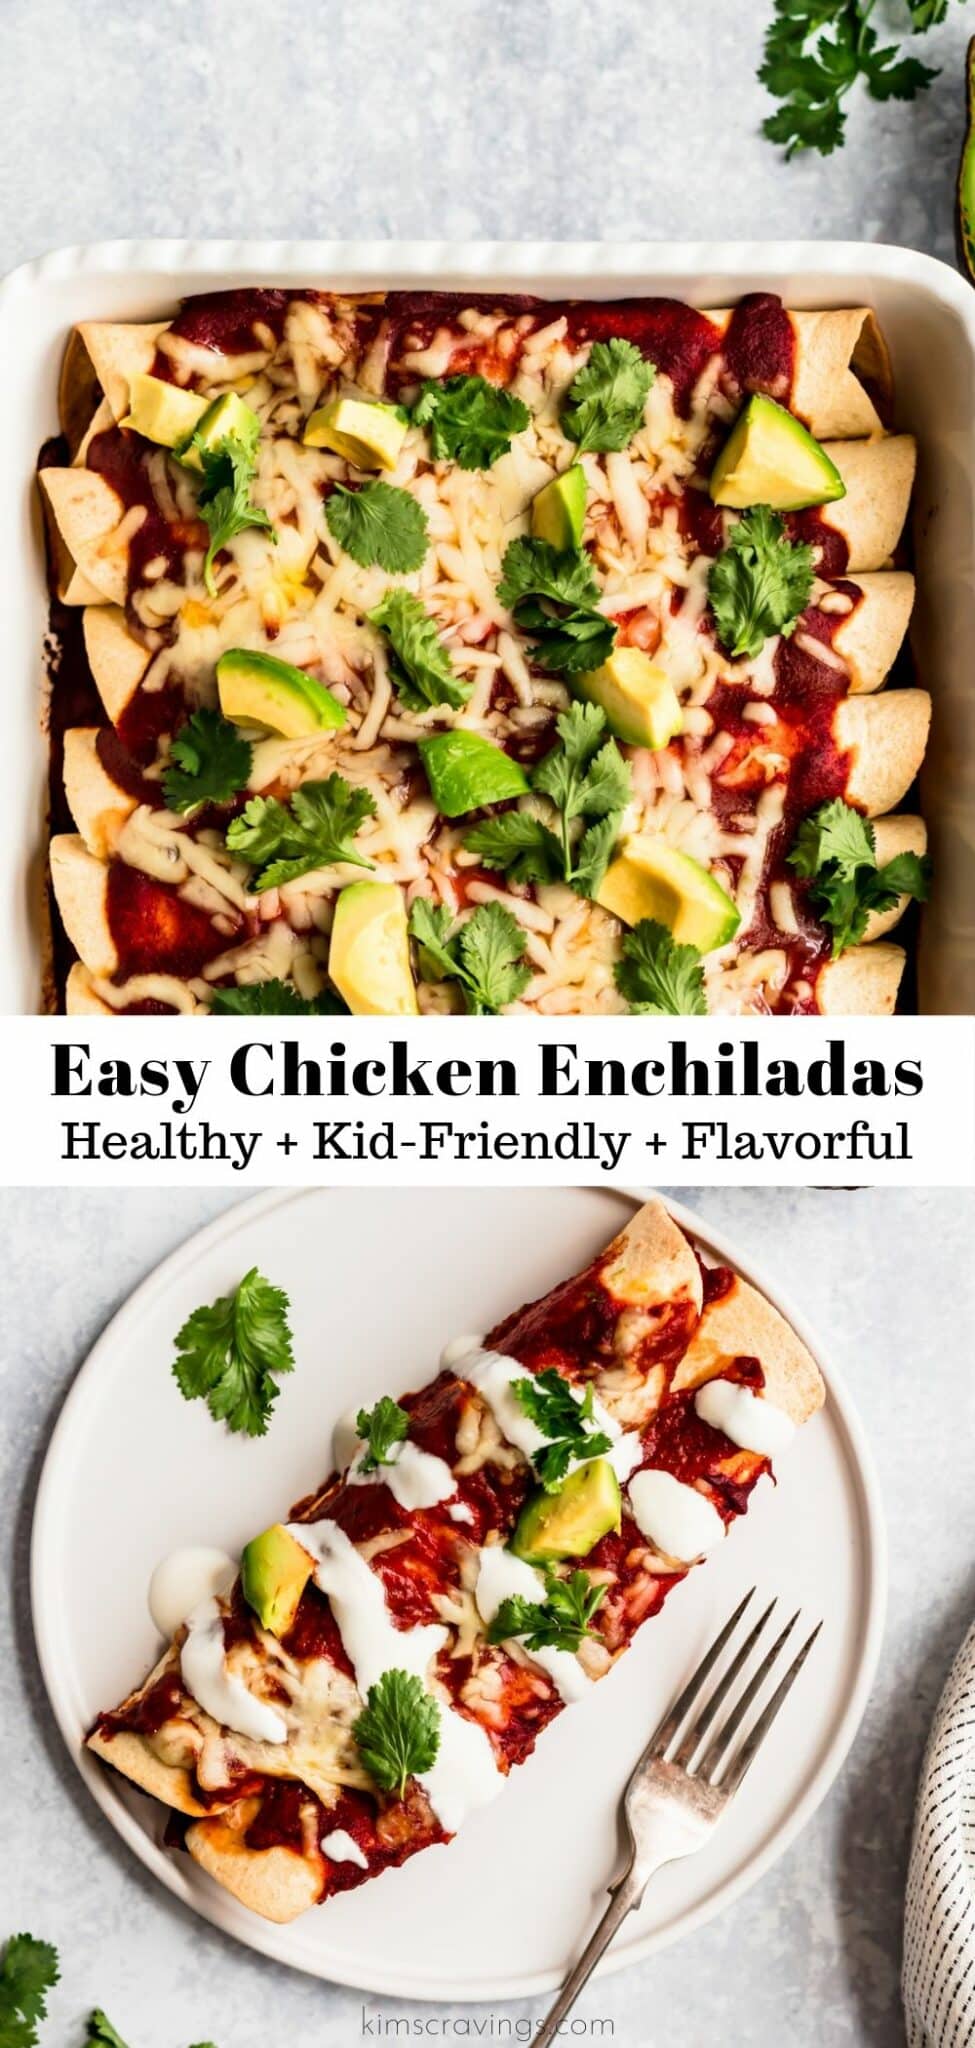 easy chicken enchiladas topped with cilantro and diced avocado